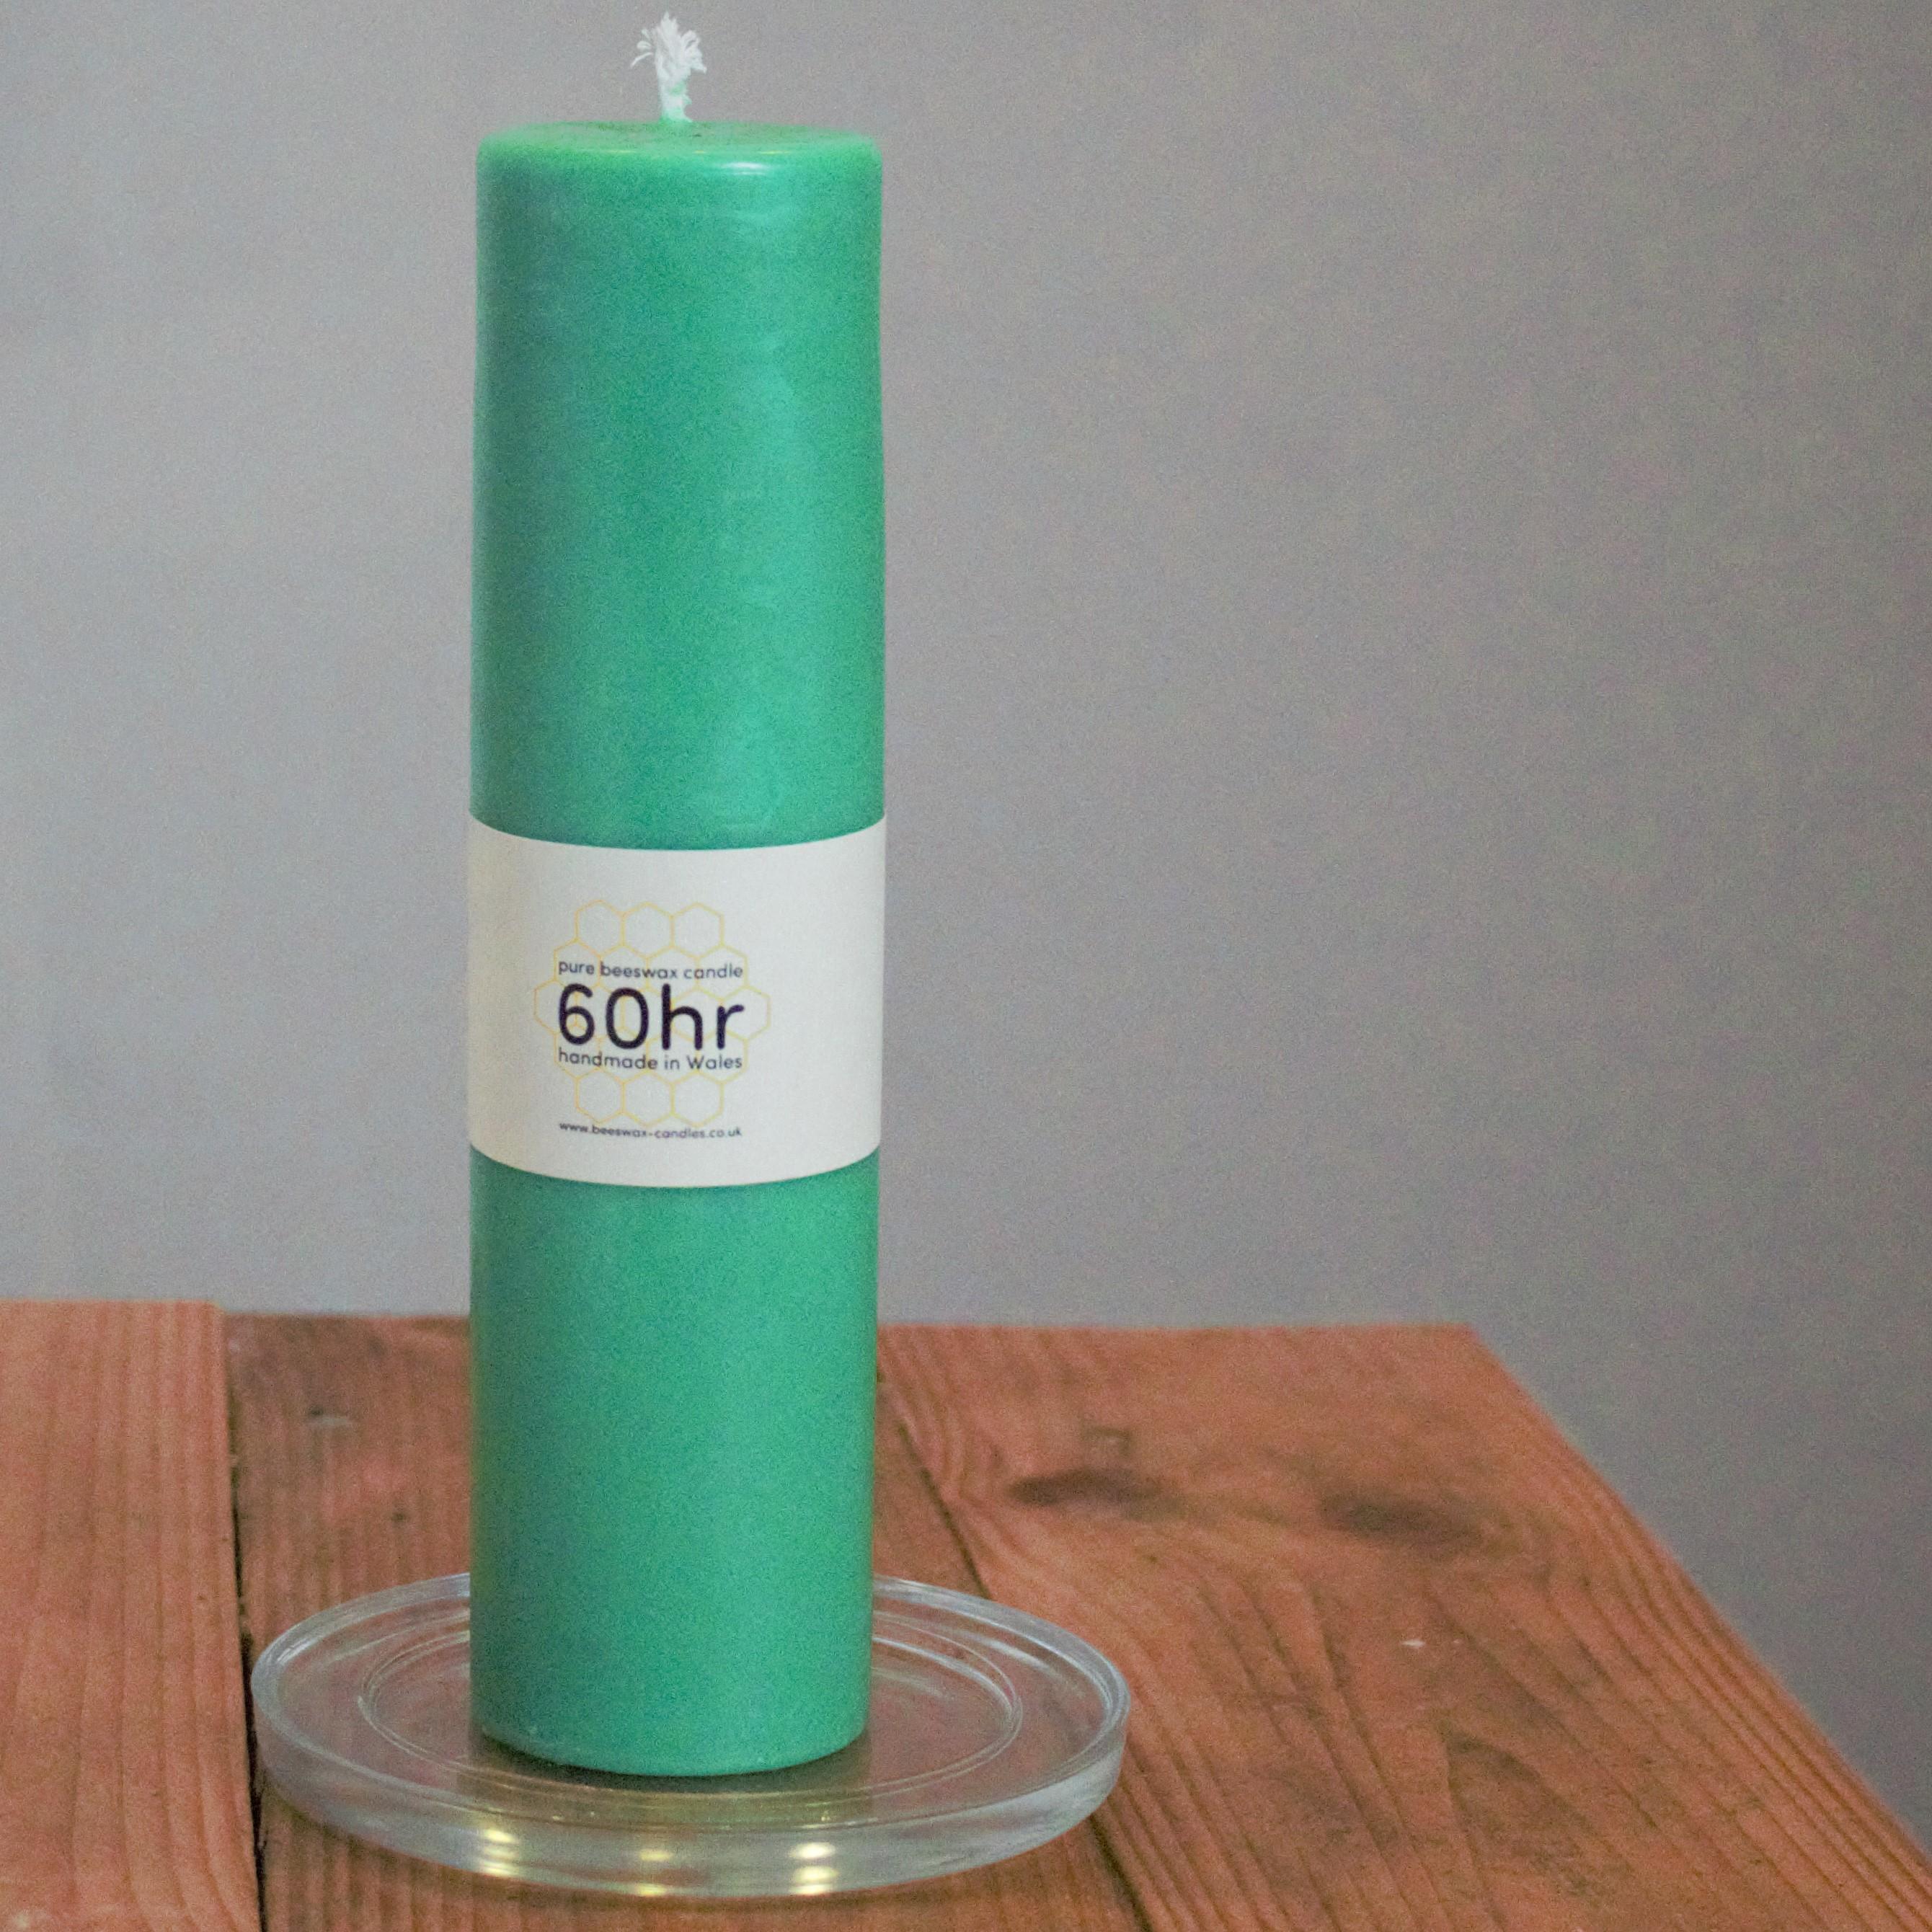 Seaweed green 60hr pure beeswax pillar candle